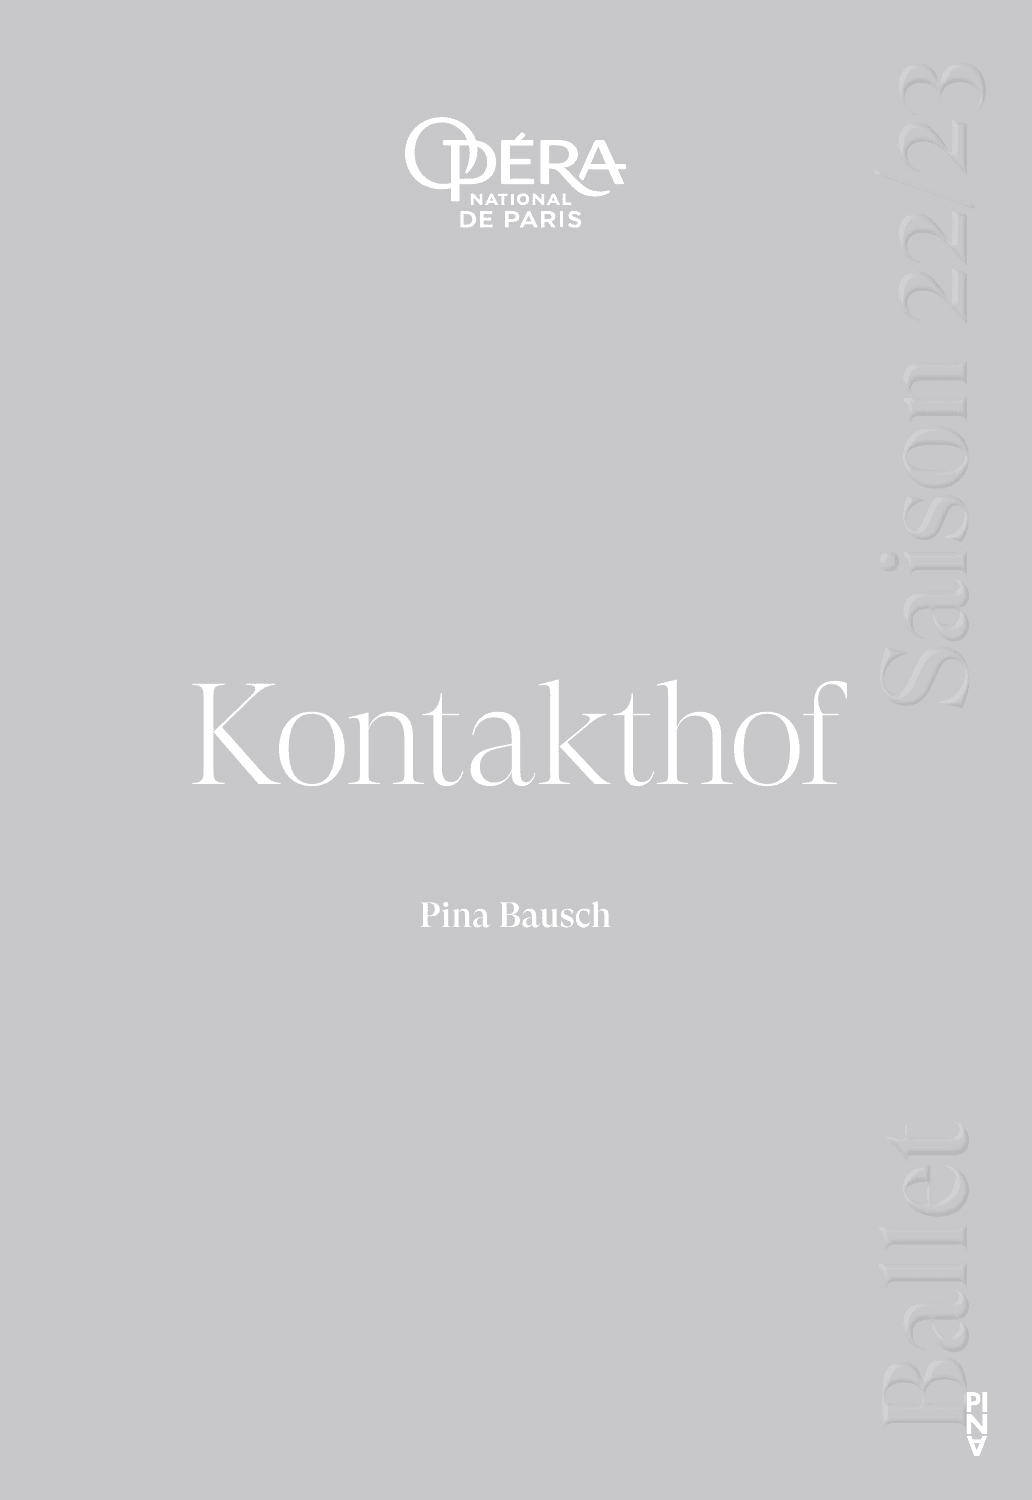 Booklet for “Kontakthof” by Pina Bausch with Paris Opera Ballet in in Paris, 12/02/2022 – 12/31/2022